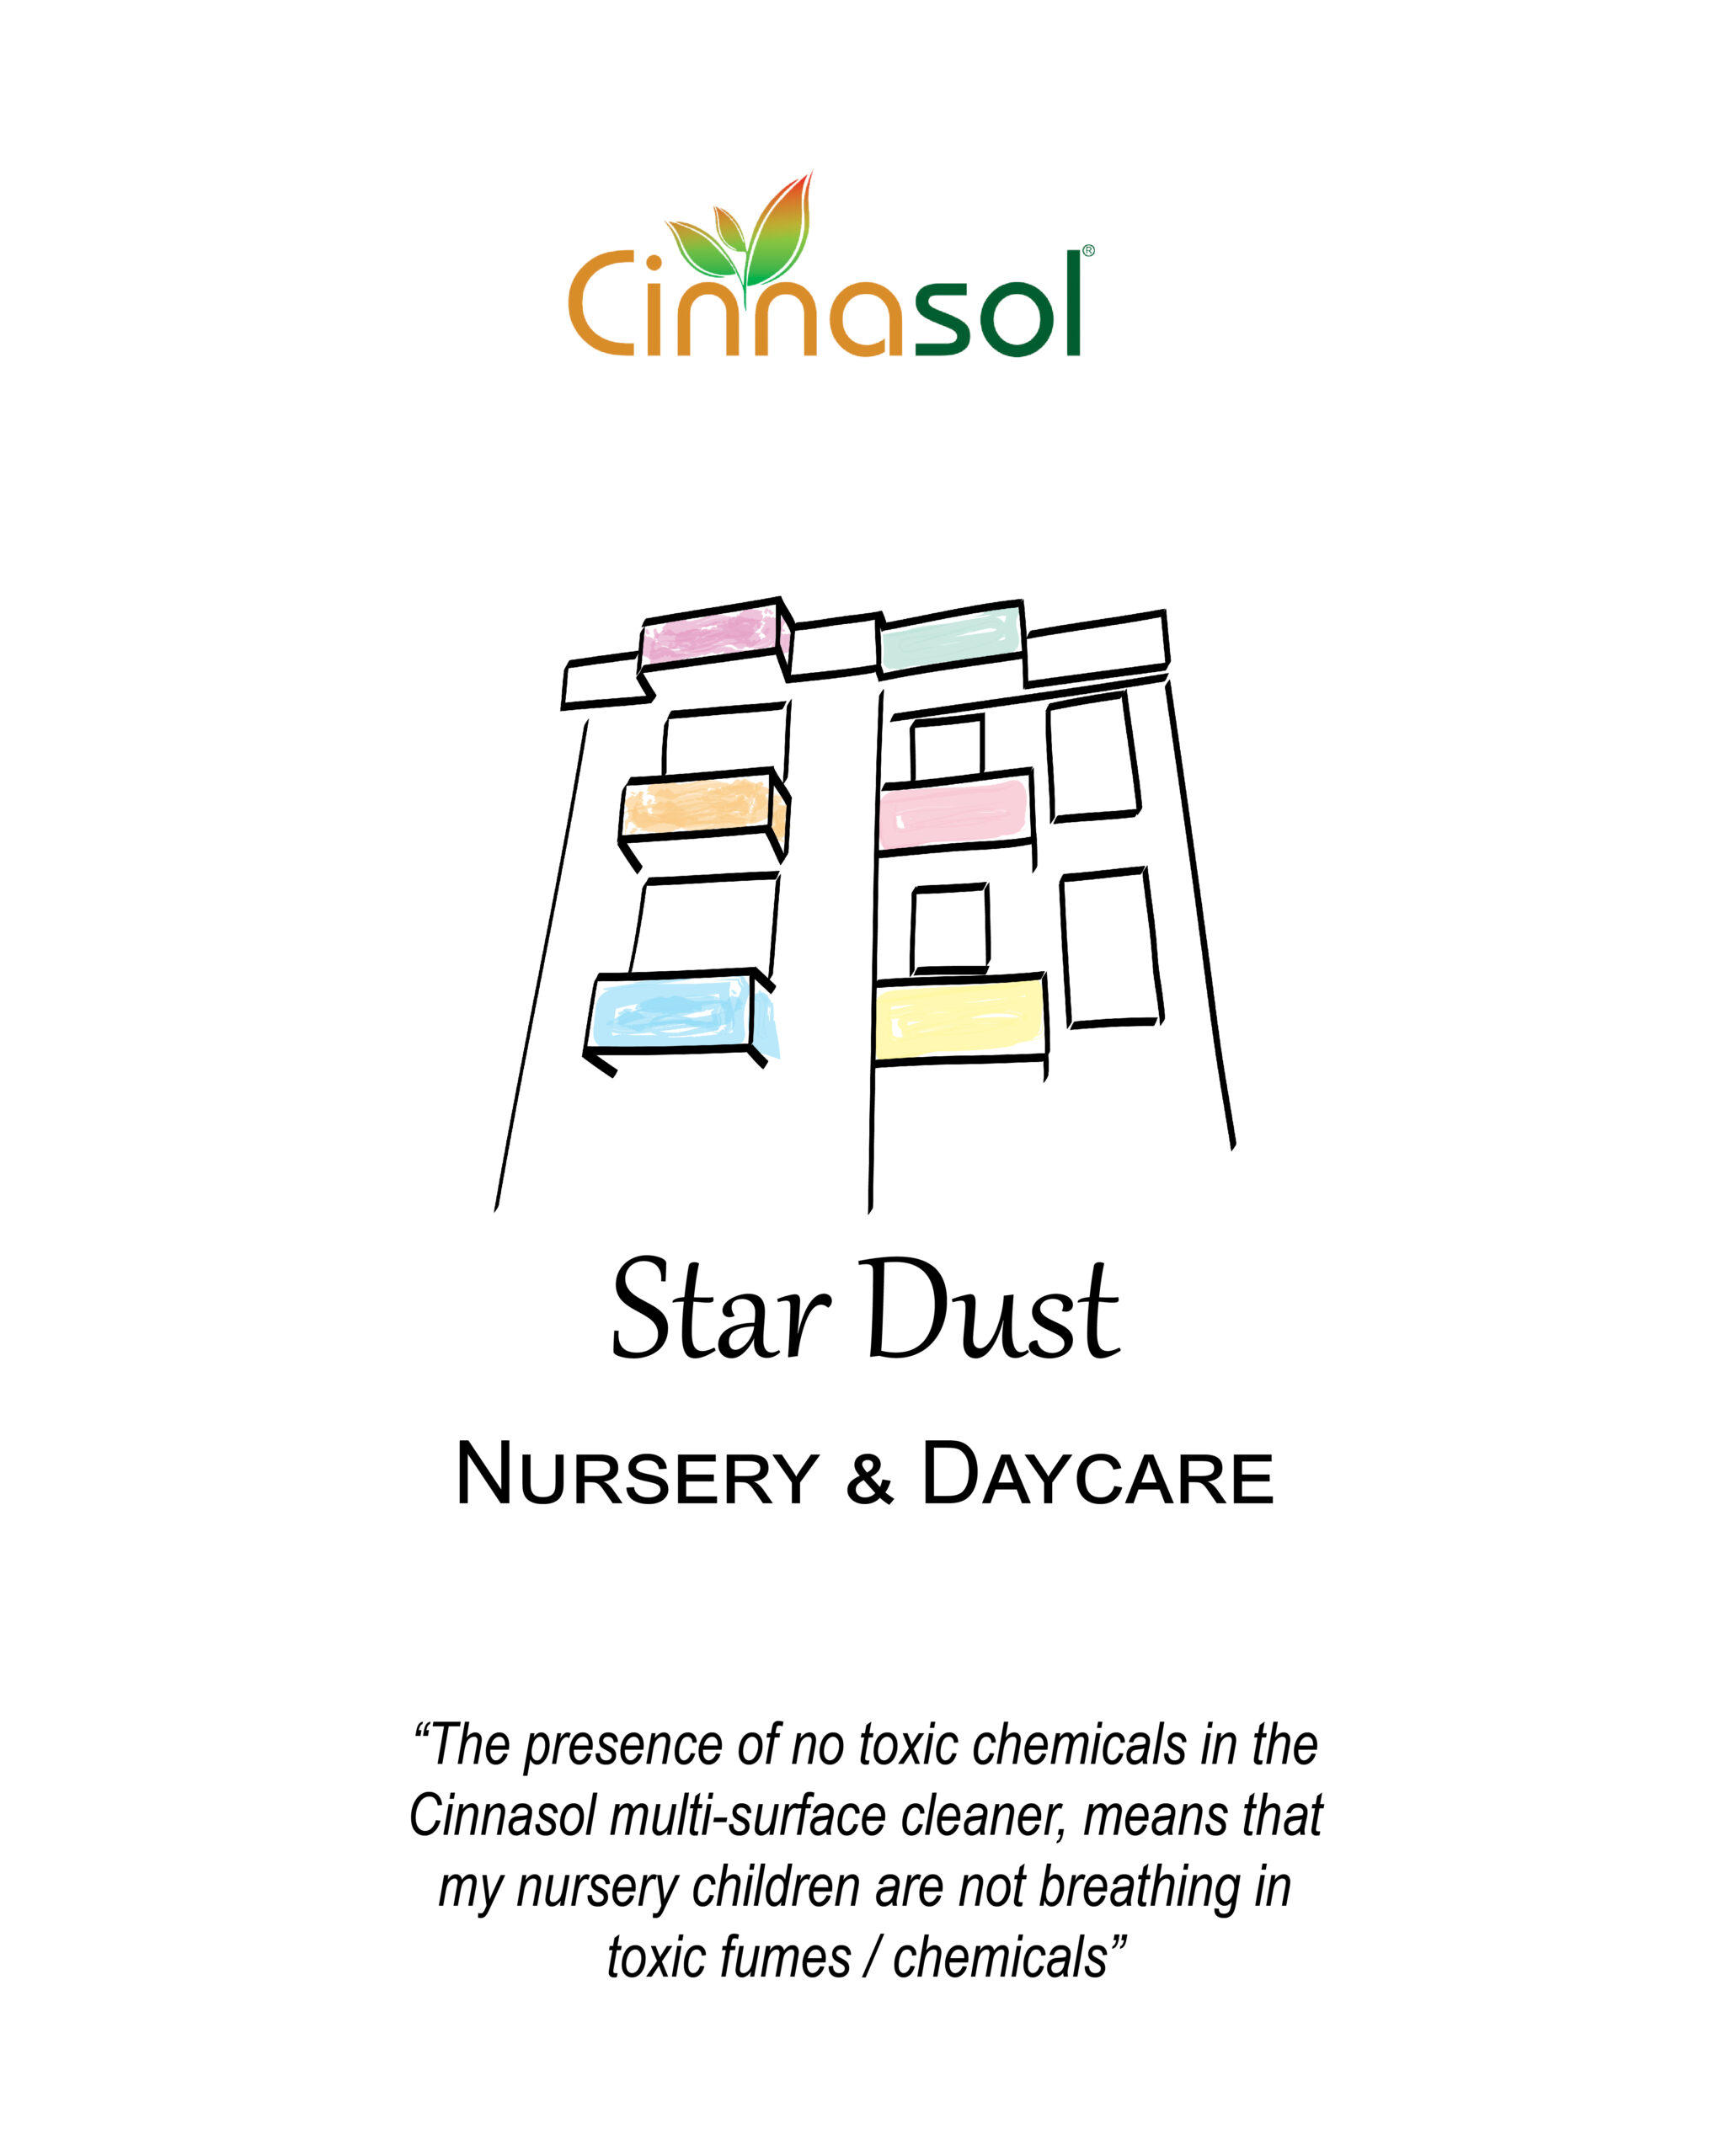 Star dust nursery testimonial